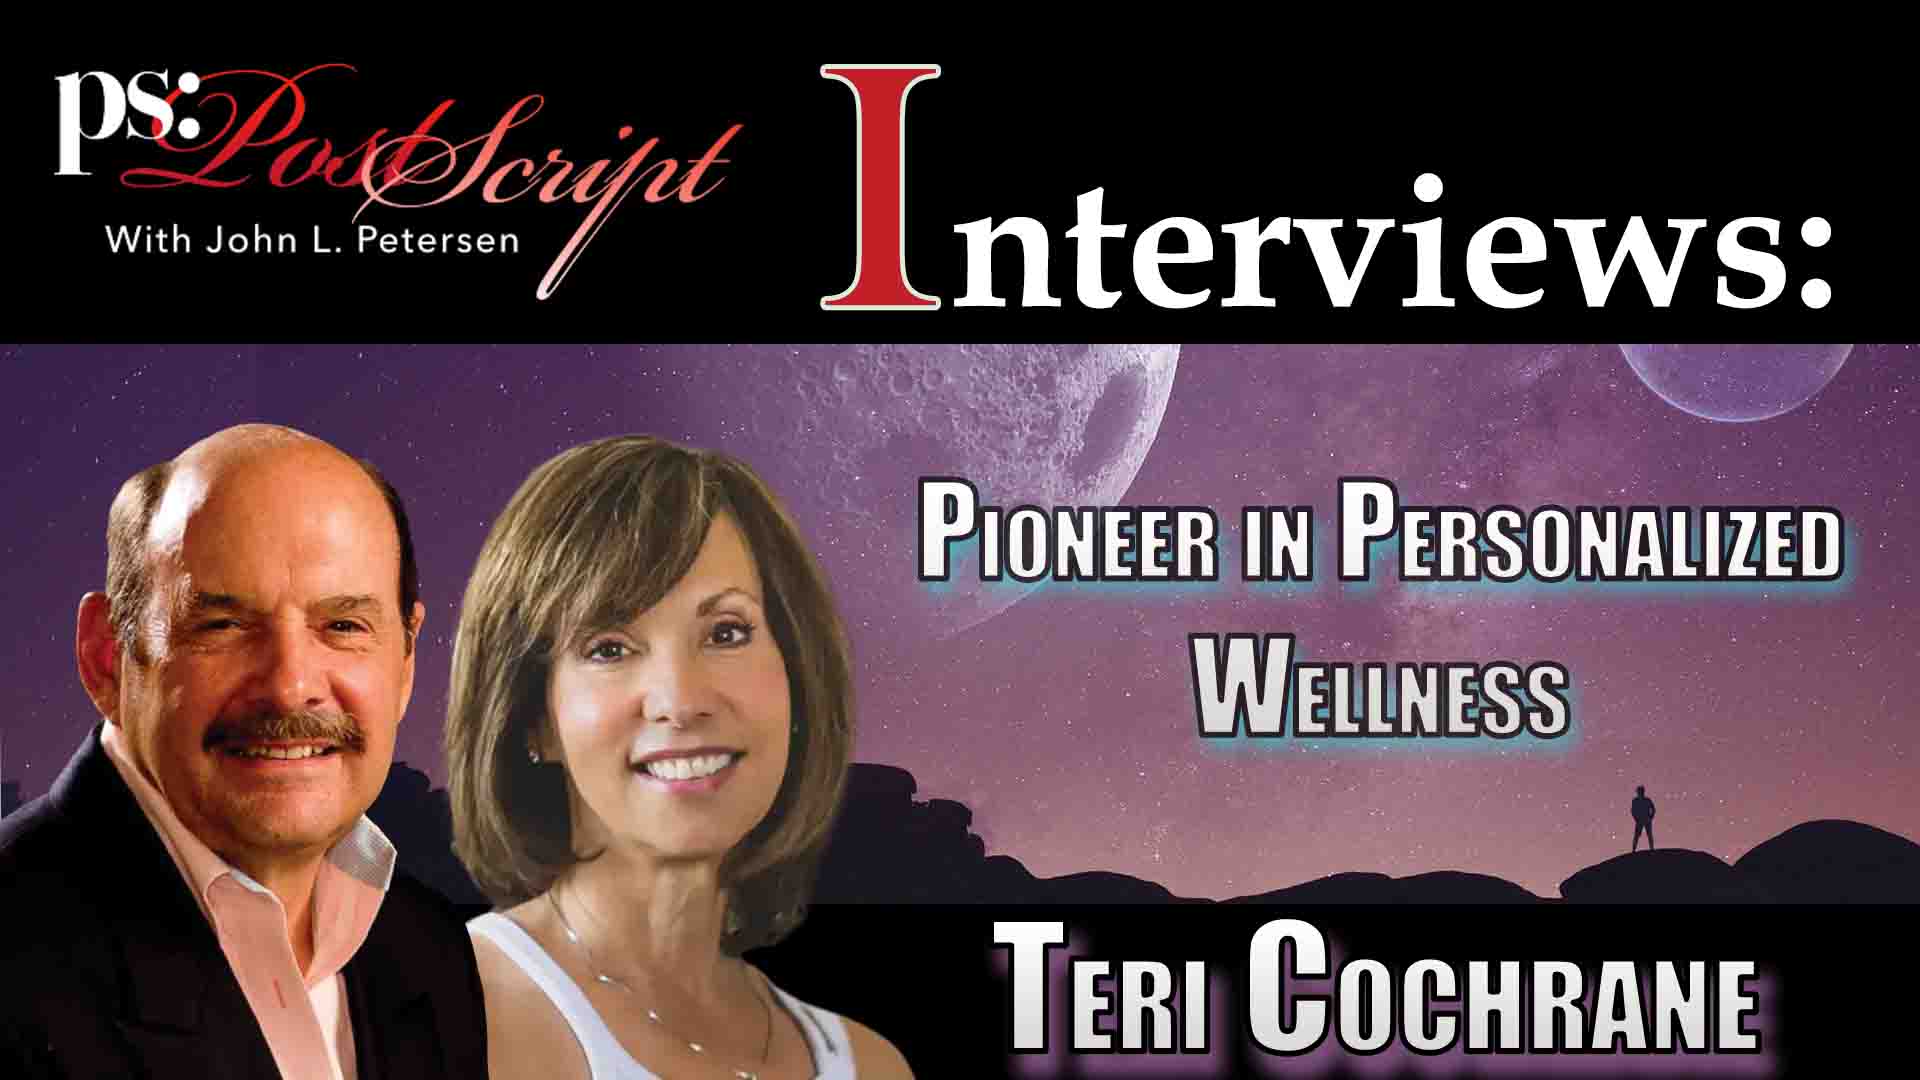 Teri Cochrane - A Pioneer in Personalized Wellness